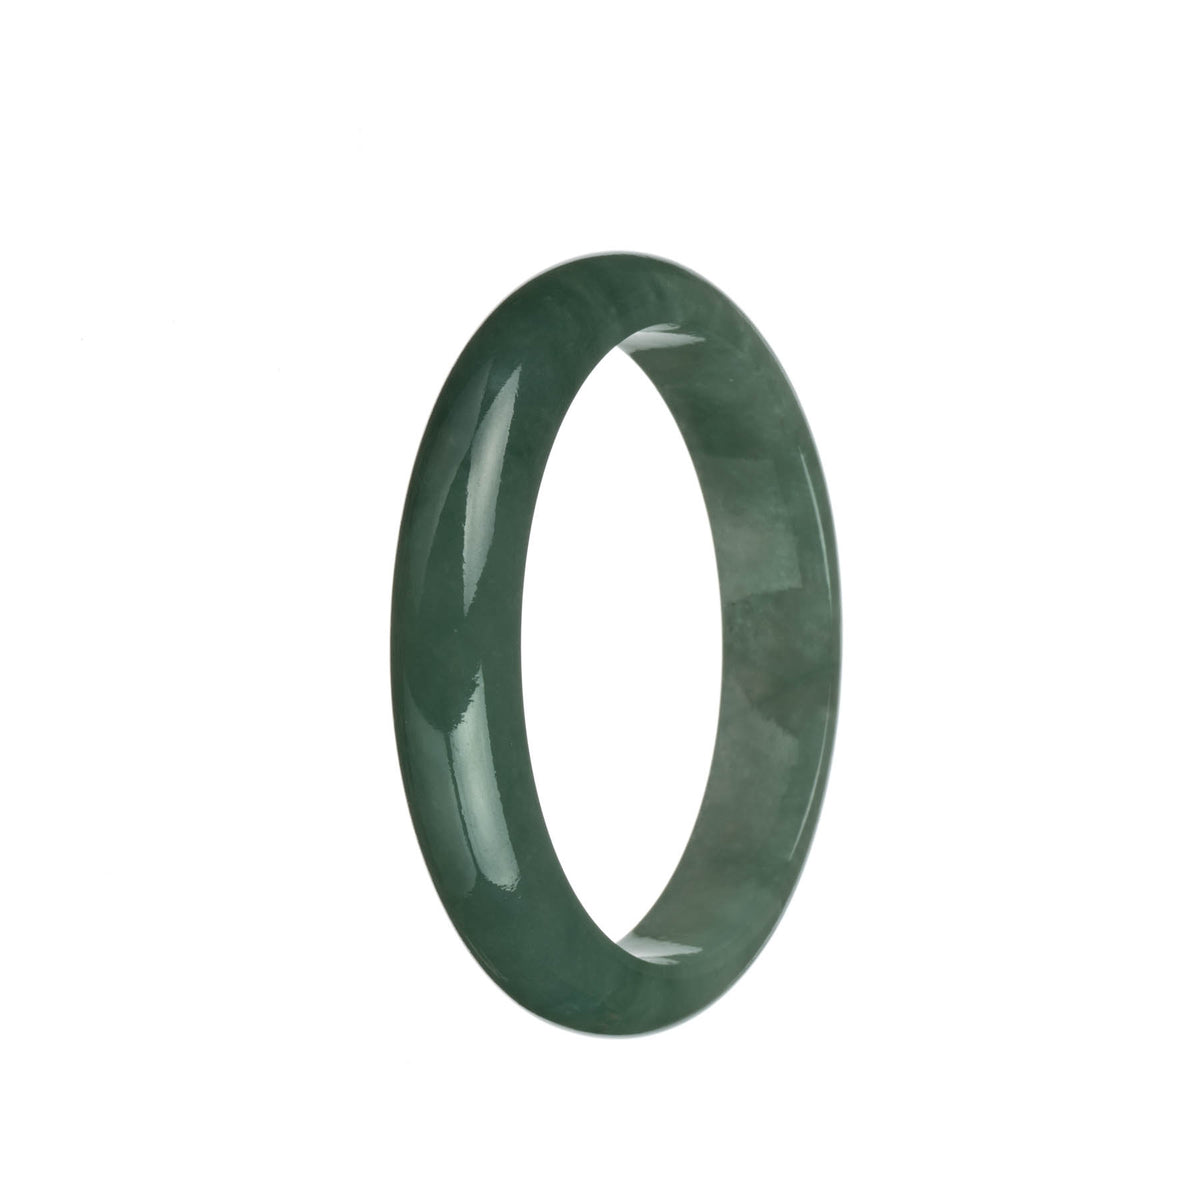 Certified Grade A Green Jadeite Bracelet - 61mm Half Moon